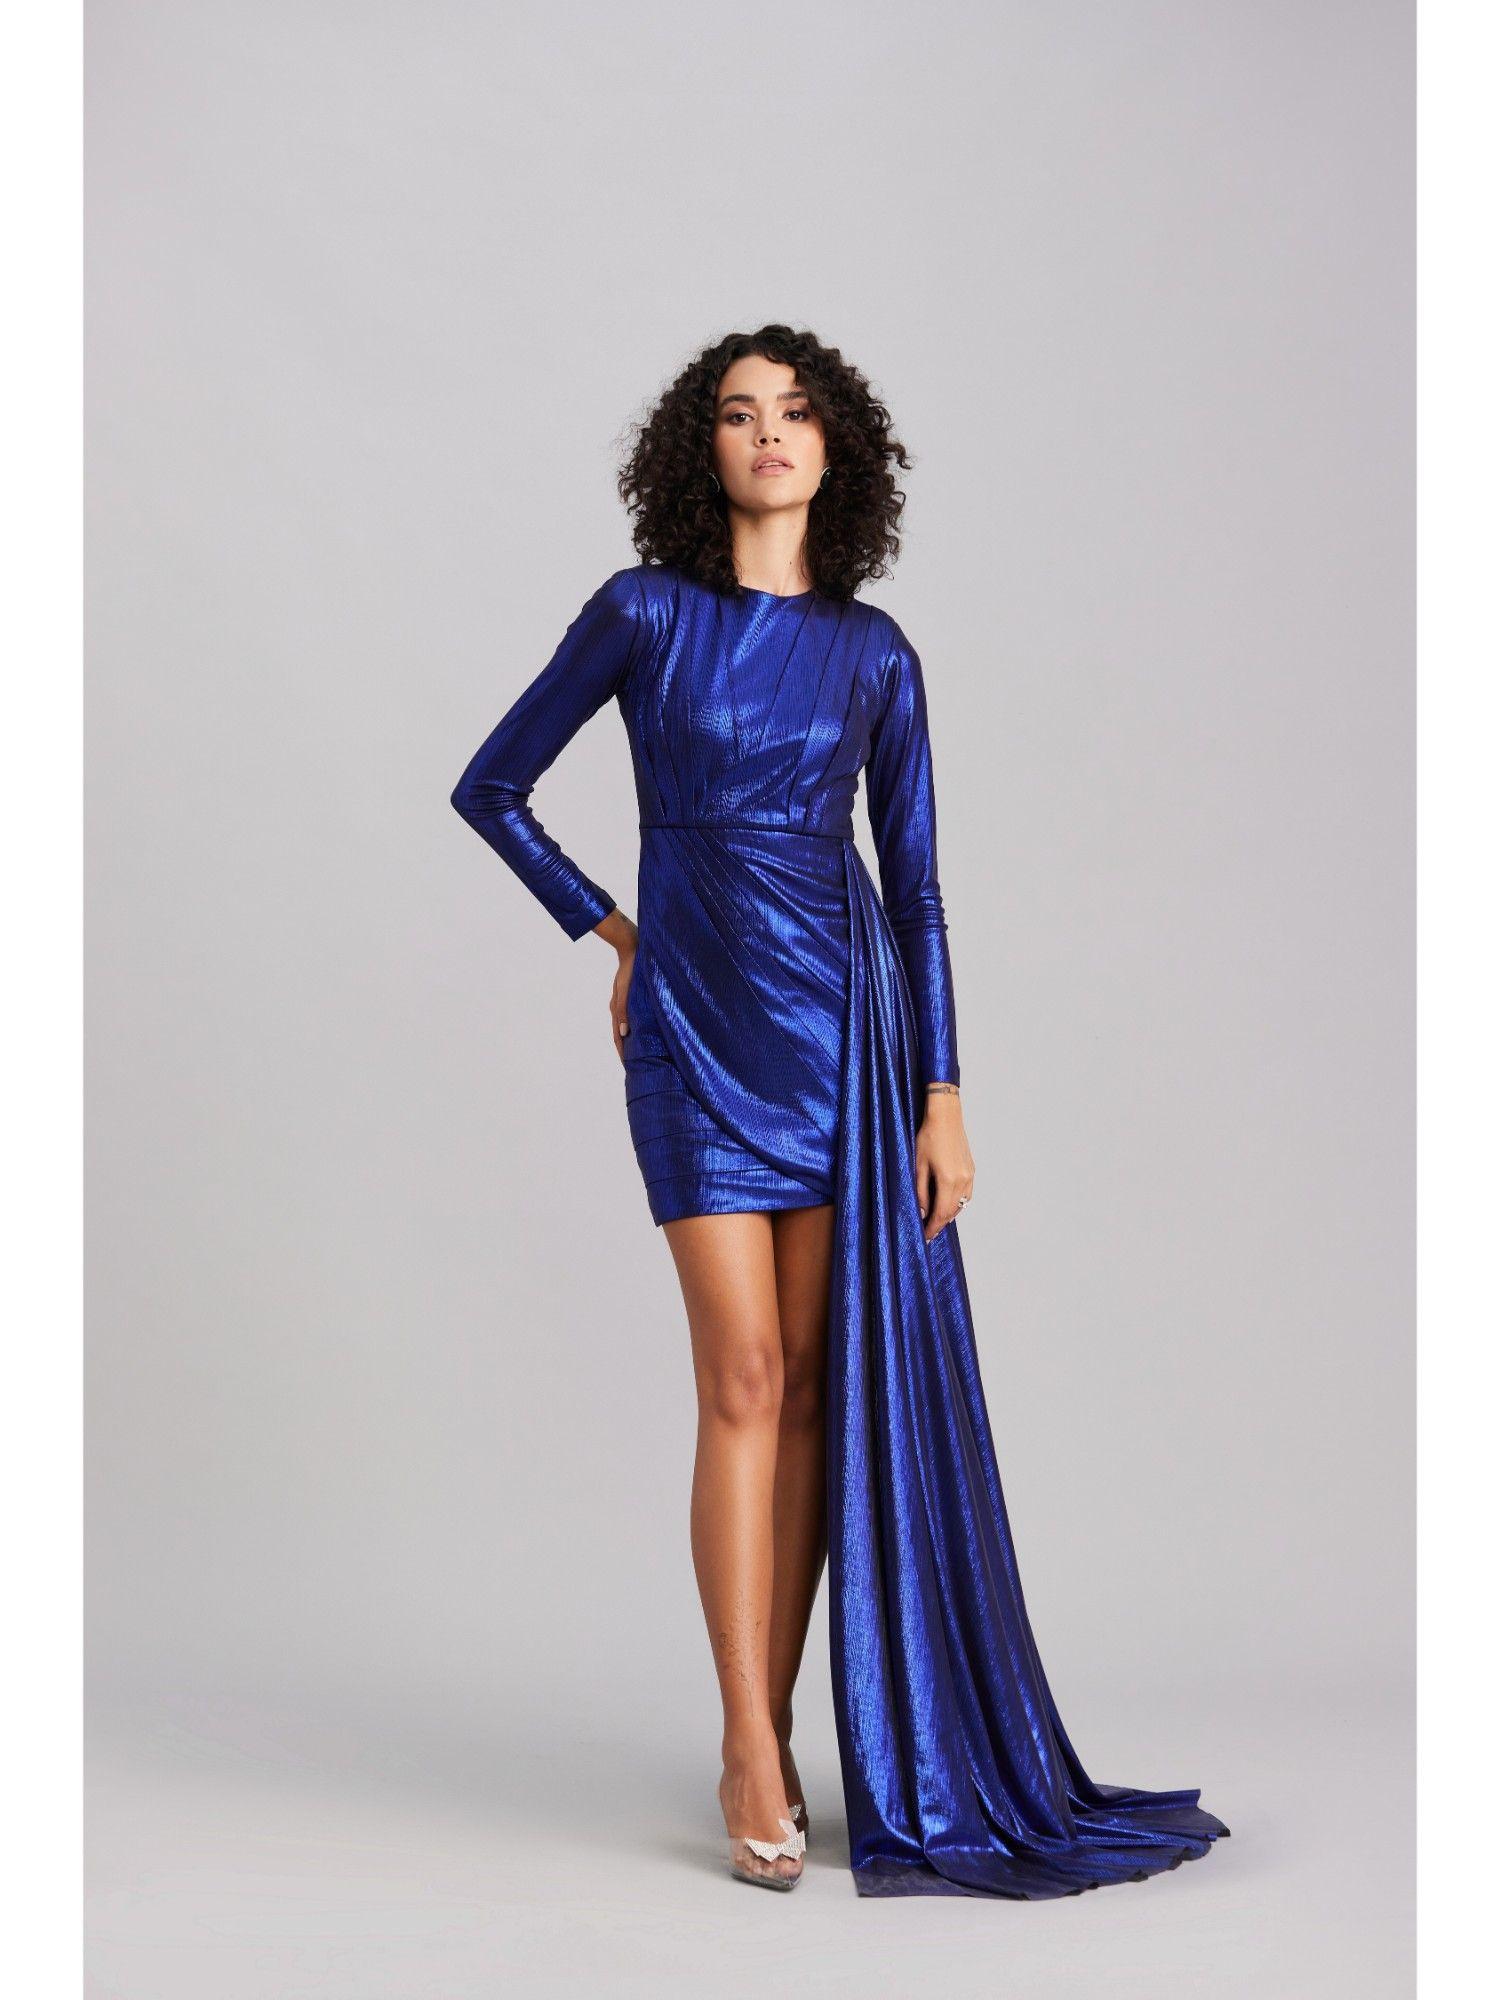 metallic blue drape dress